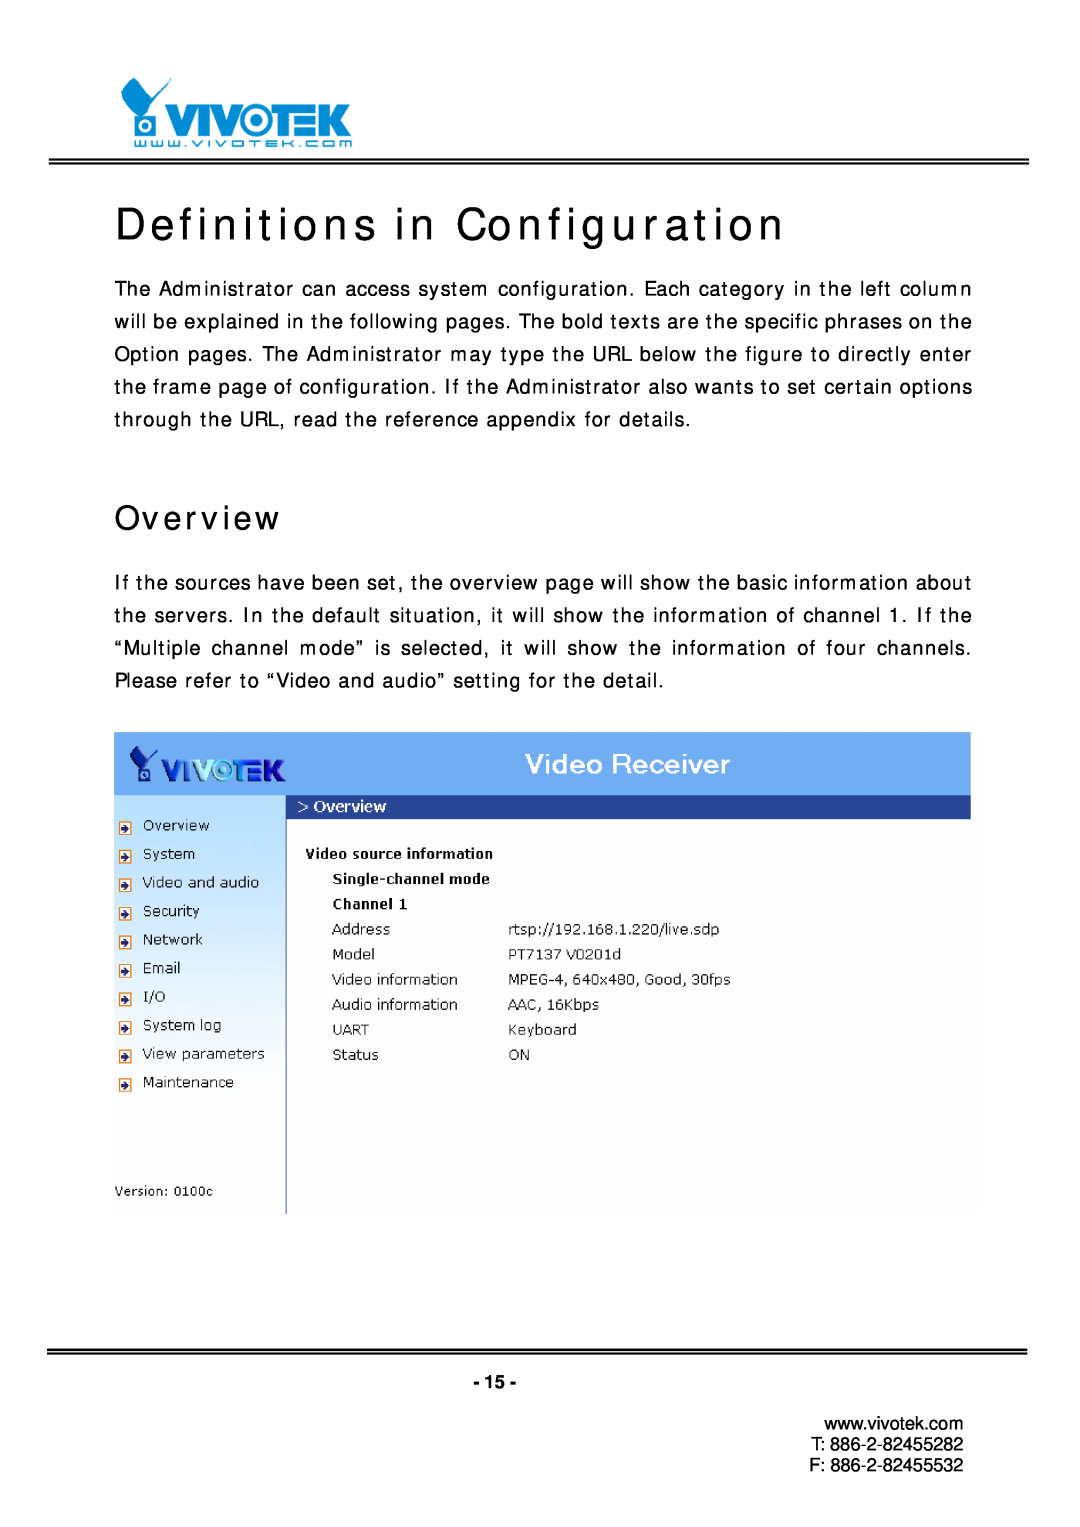 Vivotek RX7101 manual Definitions in Configuration, Overview 